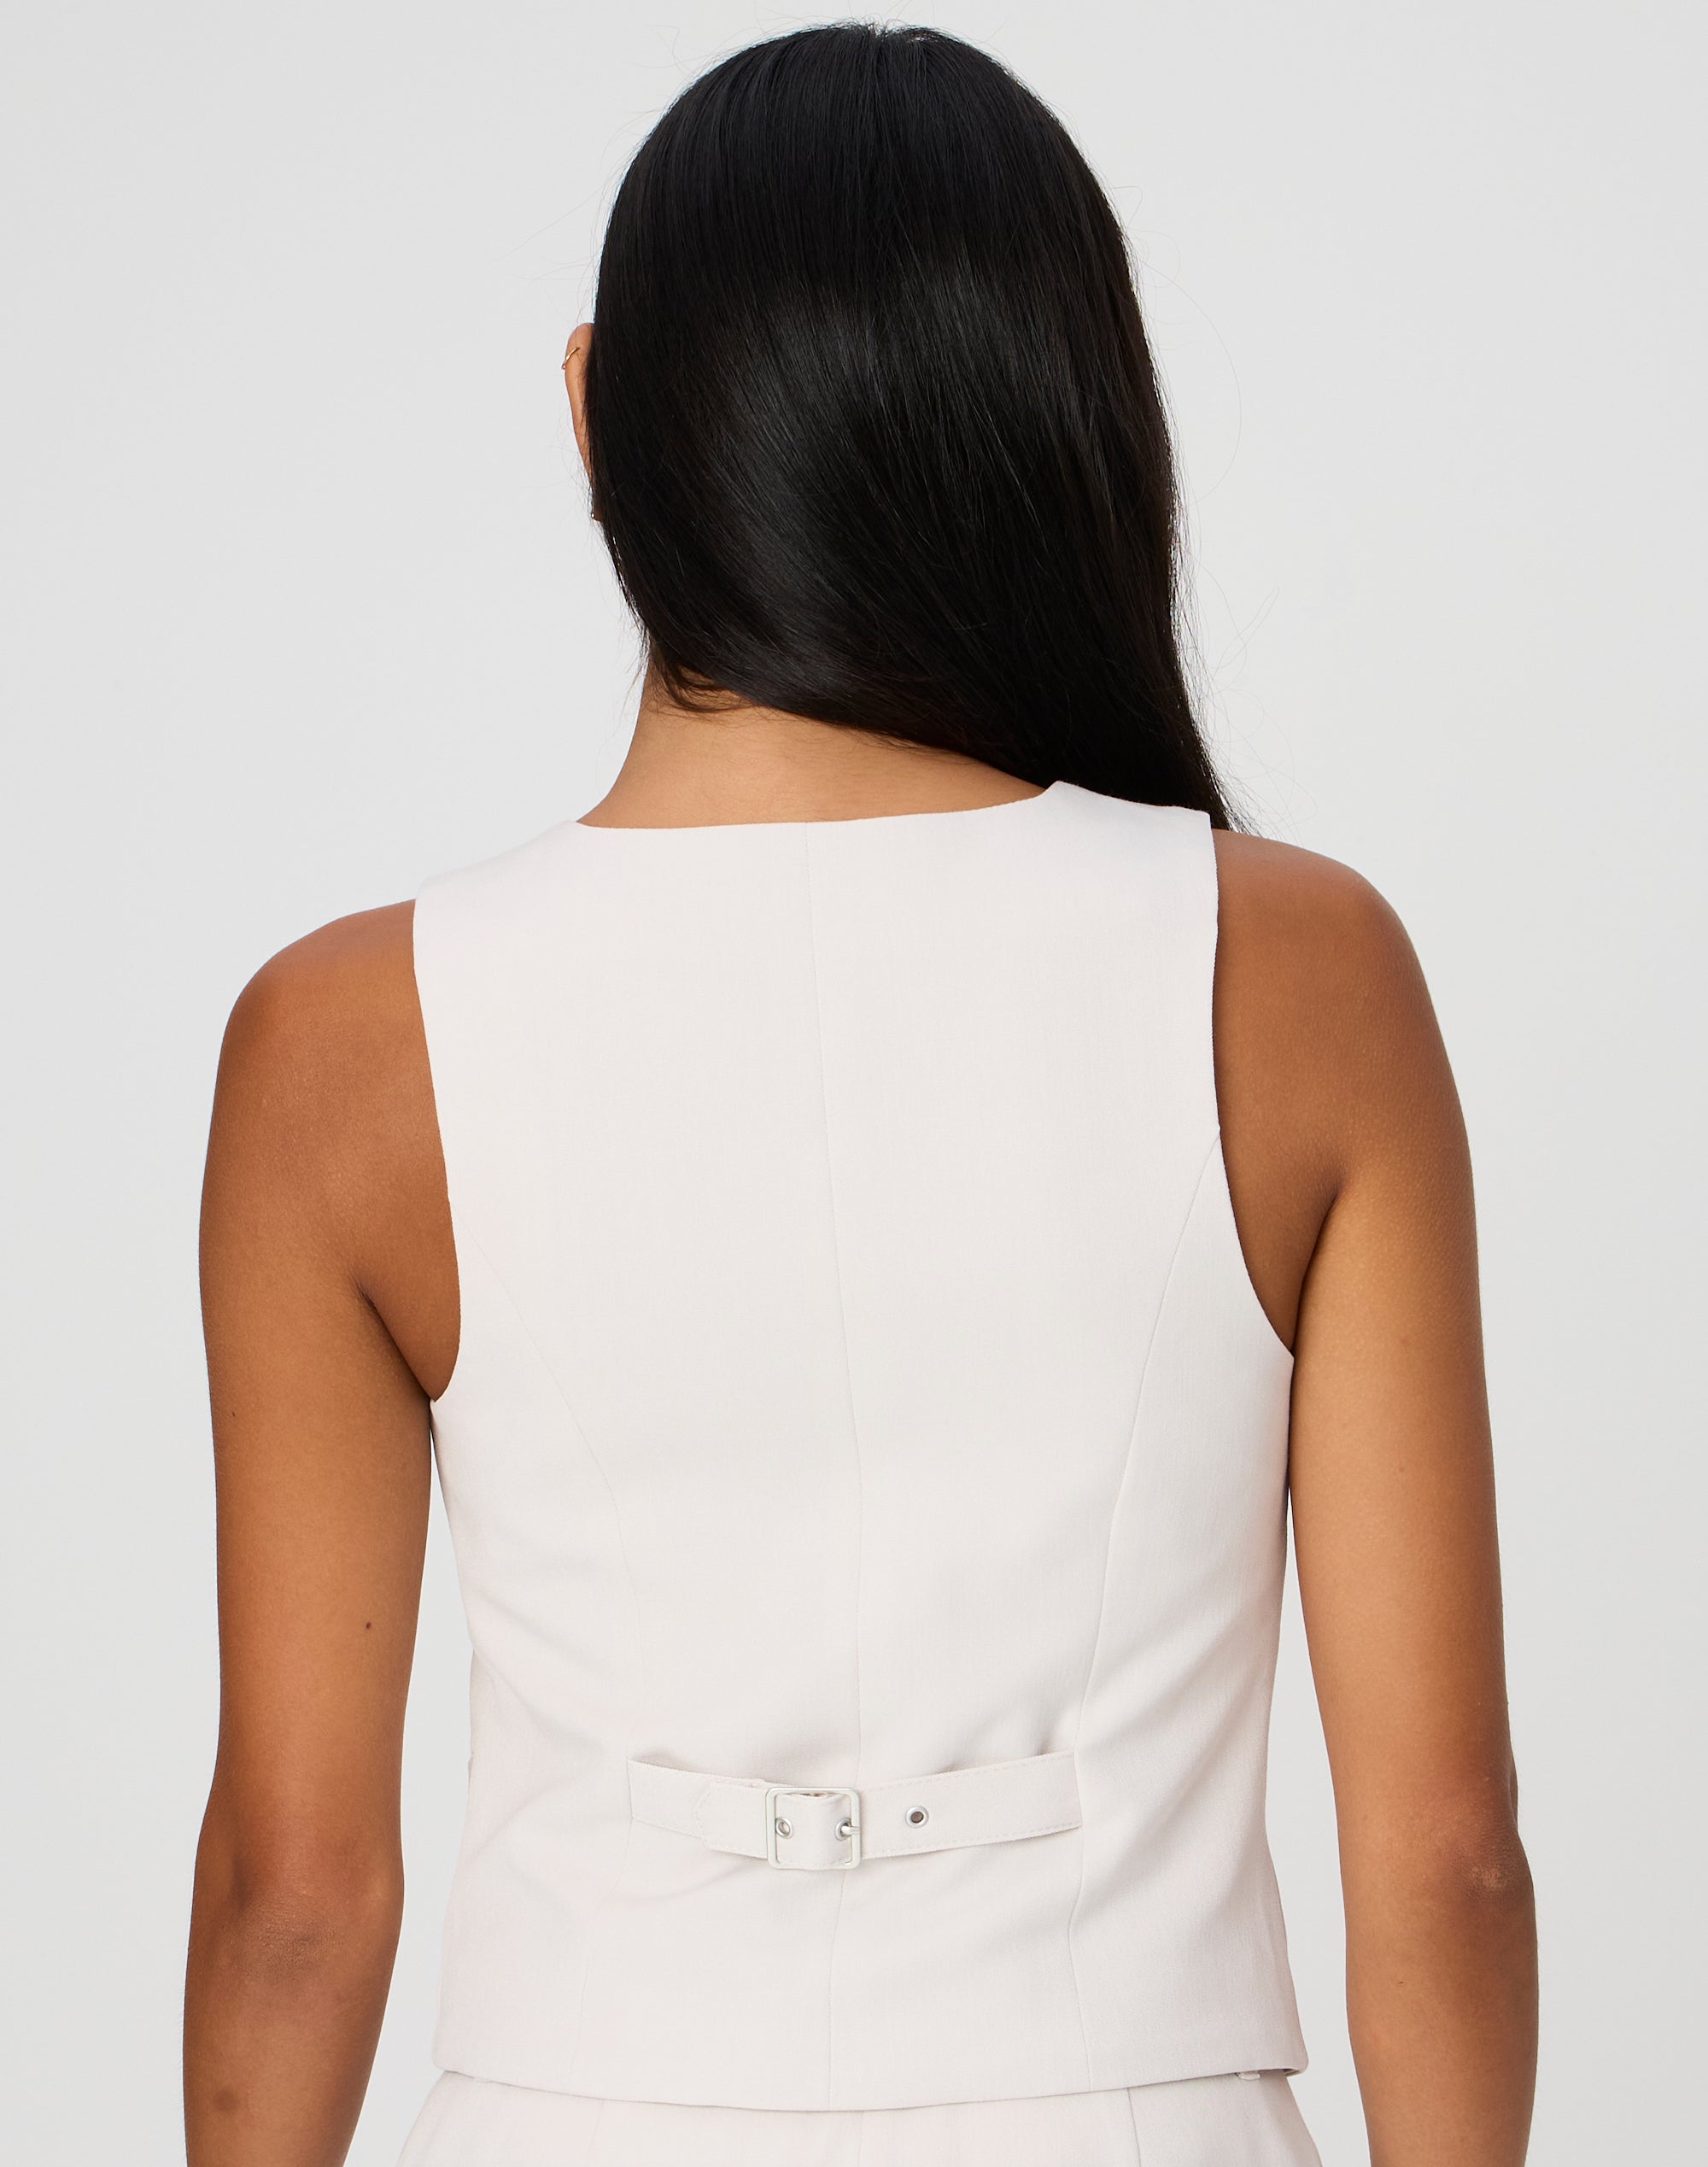 American Rag Trendy Plus Size Utility Vest, $74, Macy's